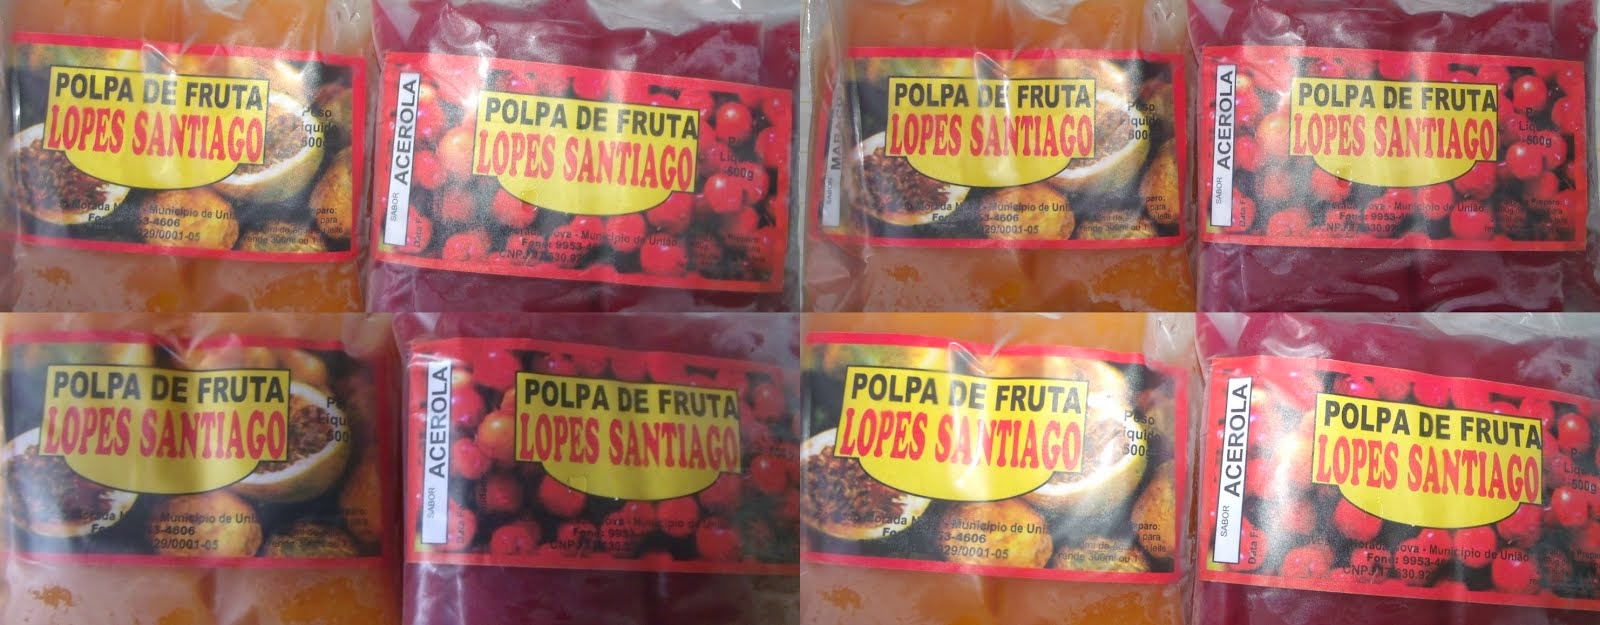 Polpa de Fruta: Lopes Santiago